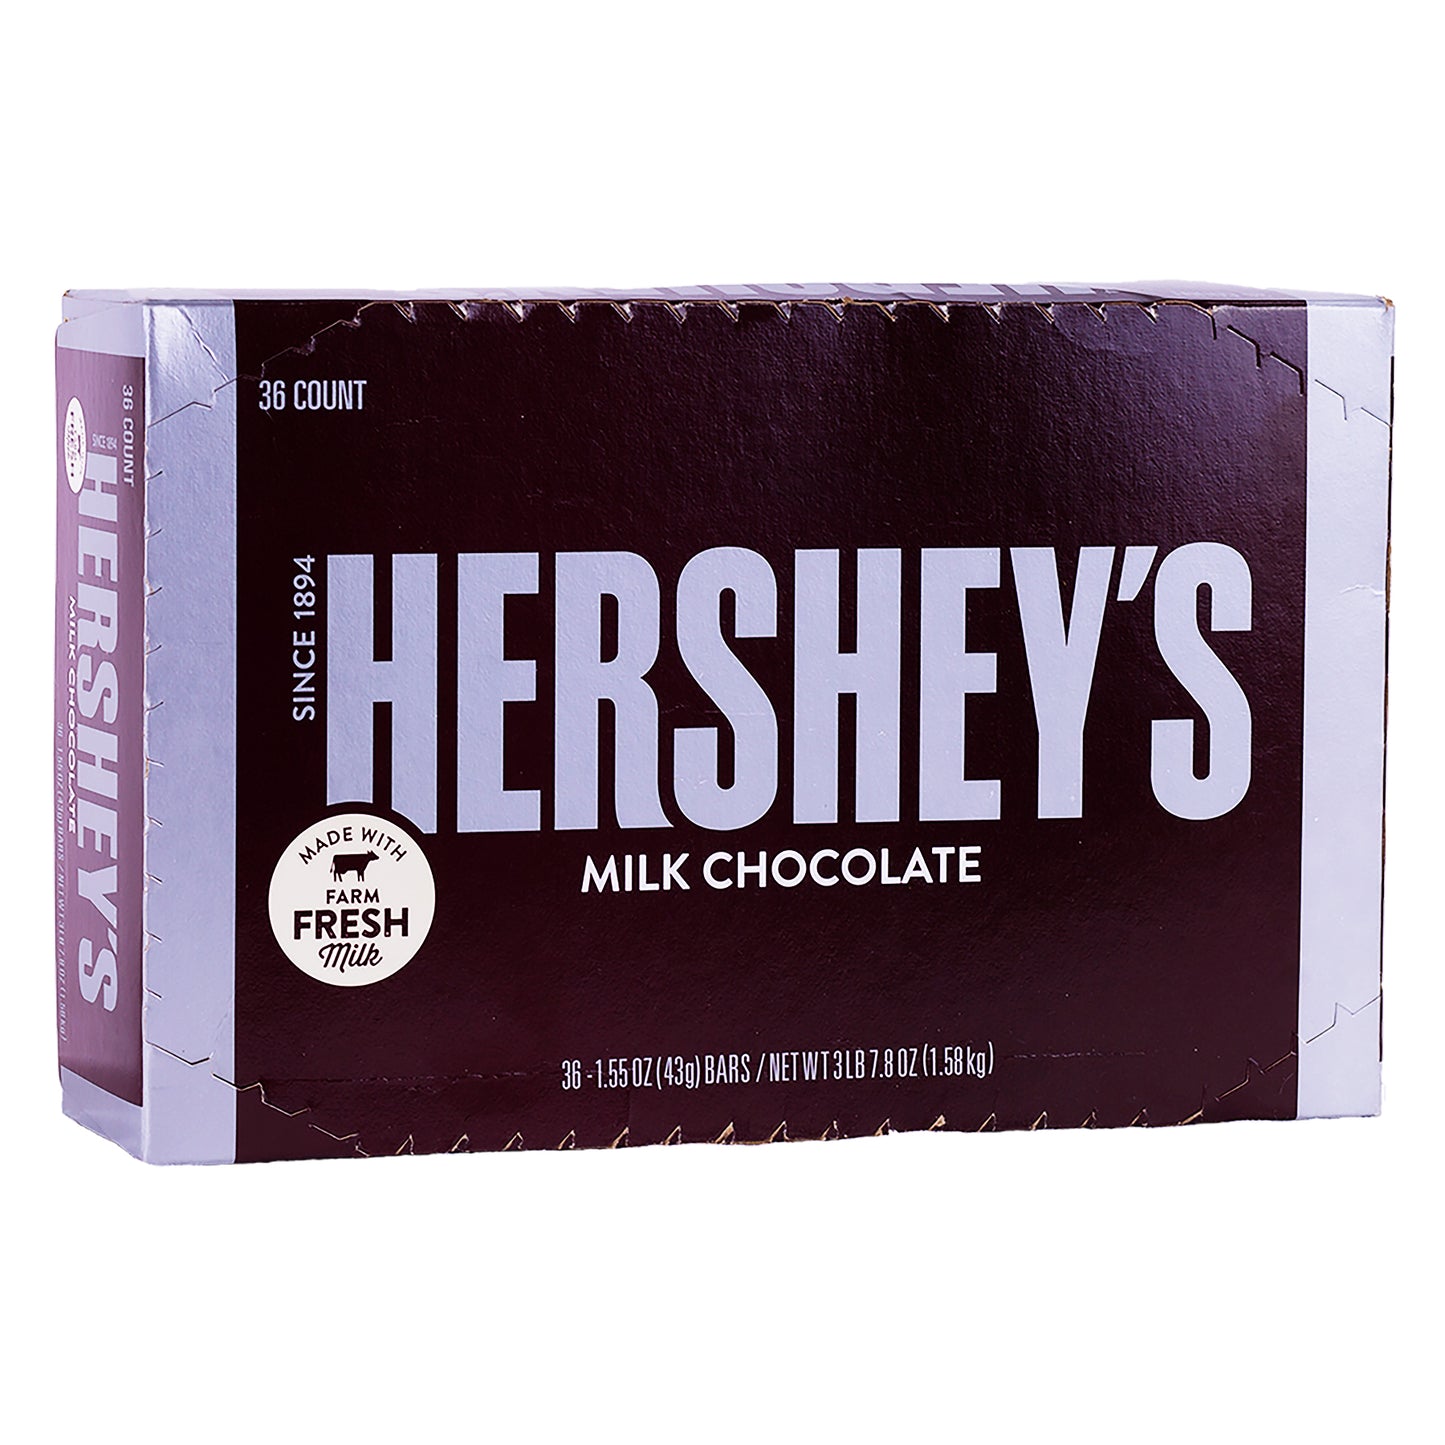 36PK HERSHEY'S MILK CHOCOLATE BAR DISPLAY